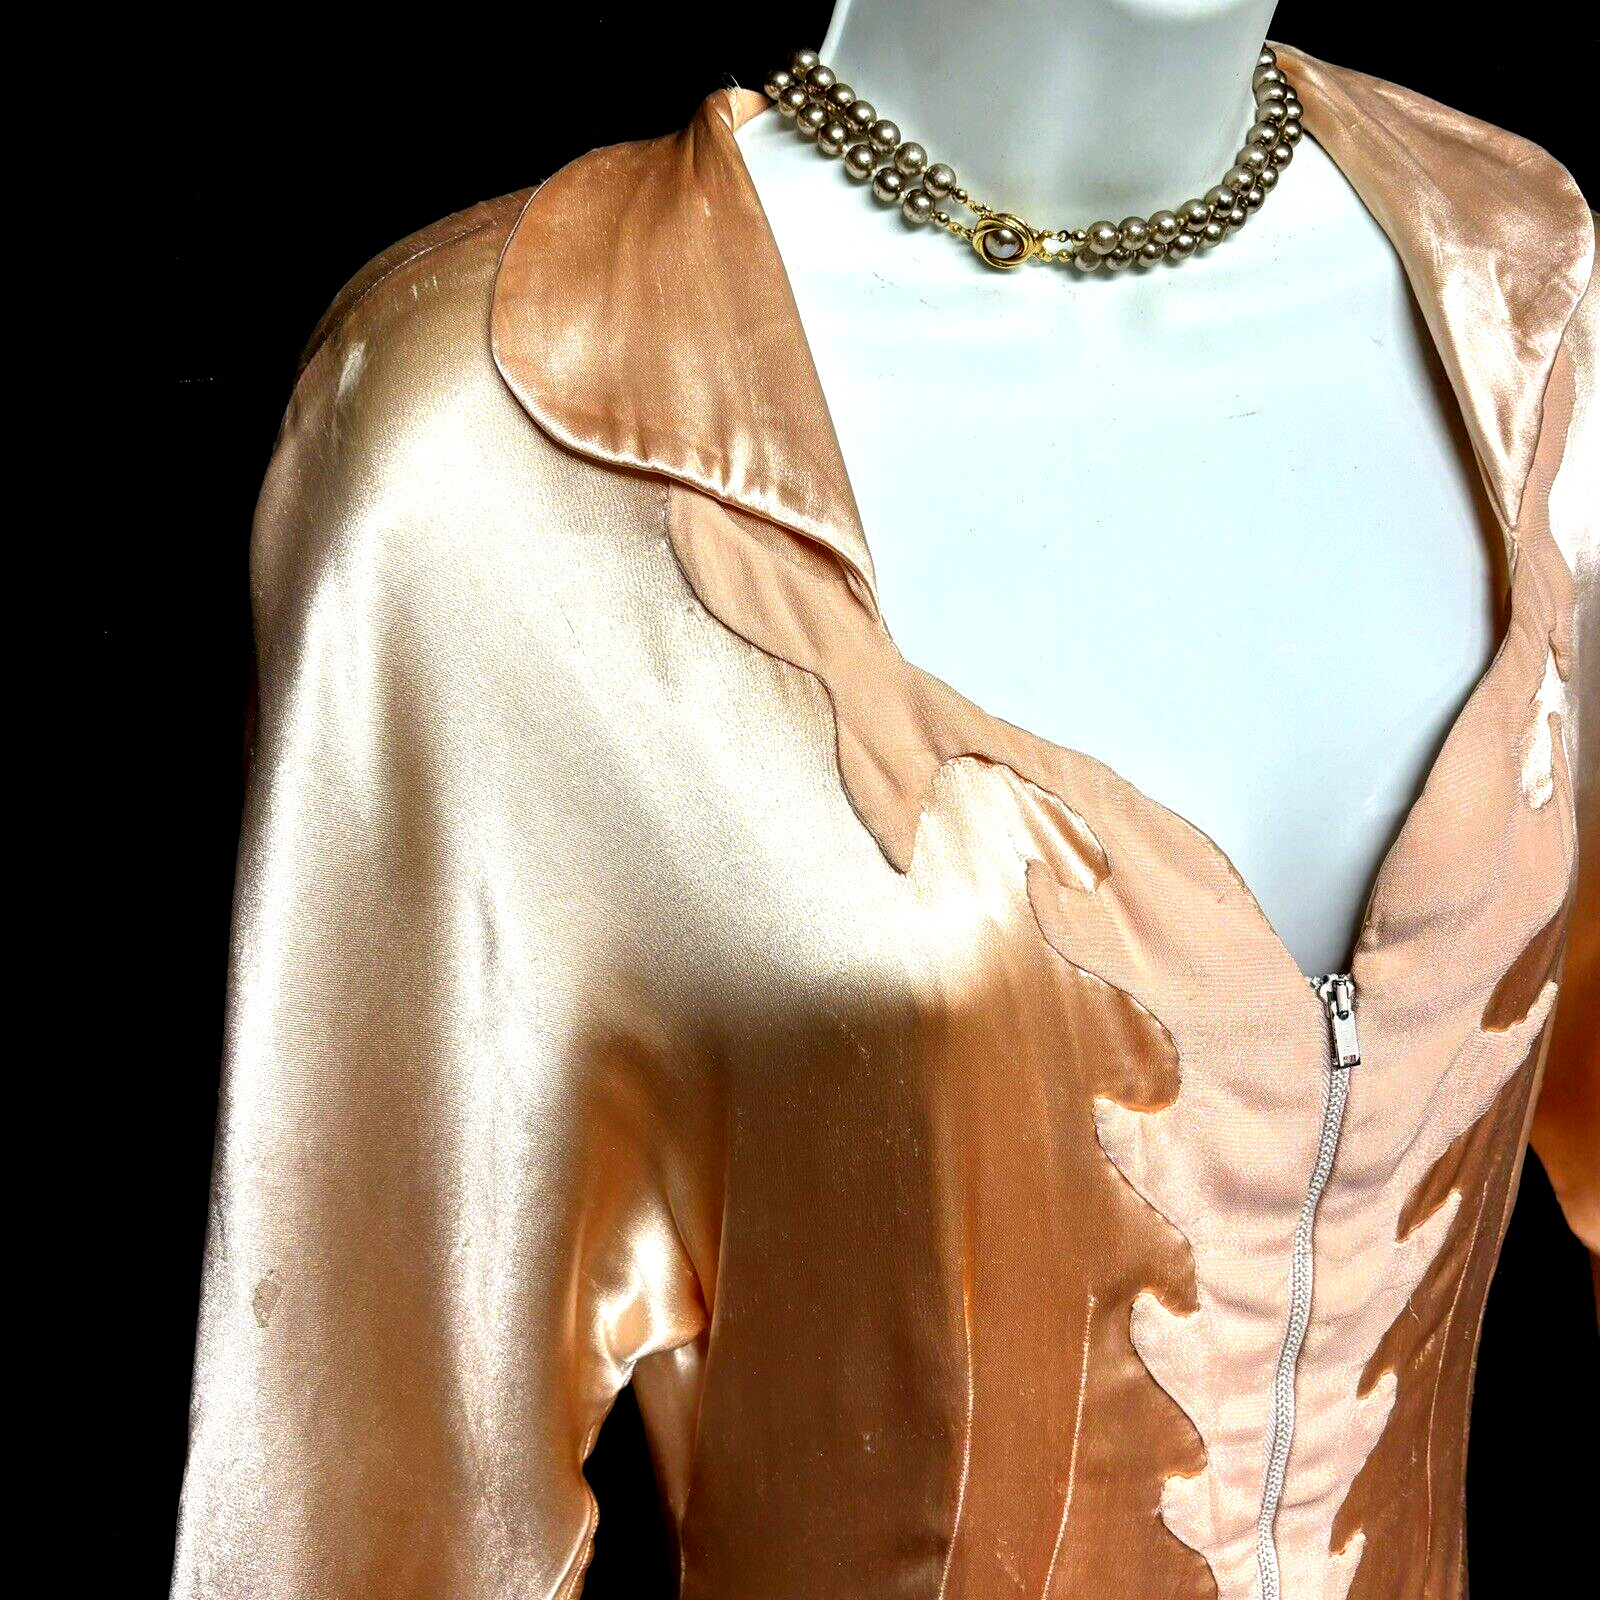 VTG 1930s/40s Peach Satin Dressing Gown Peignoir Boudoir Bias Cut Handmade SWEEP